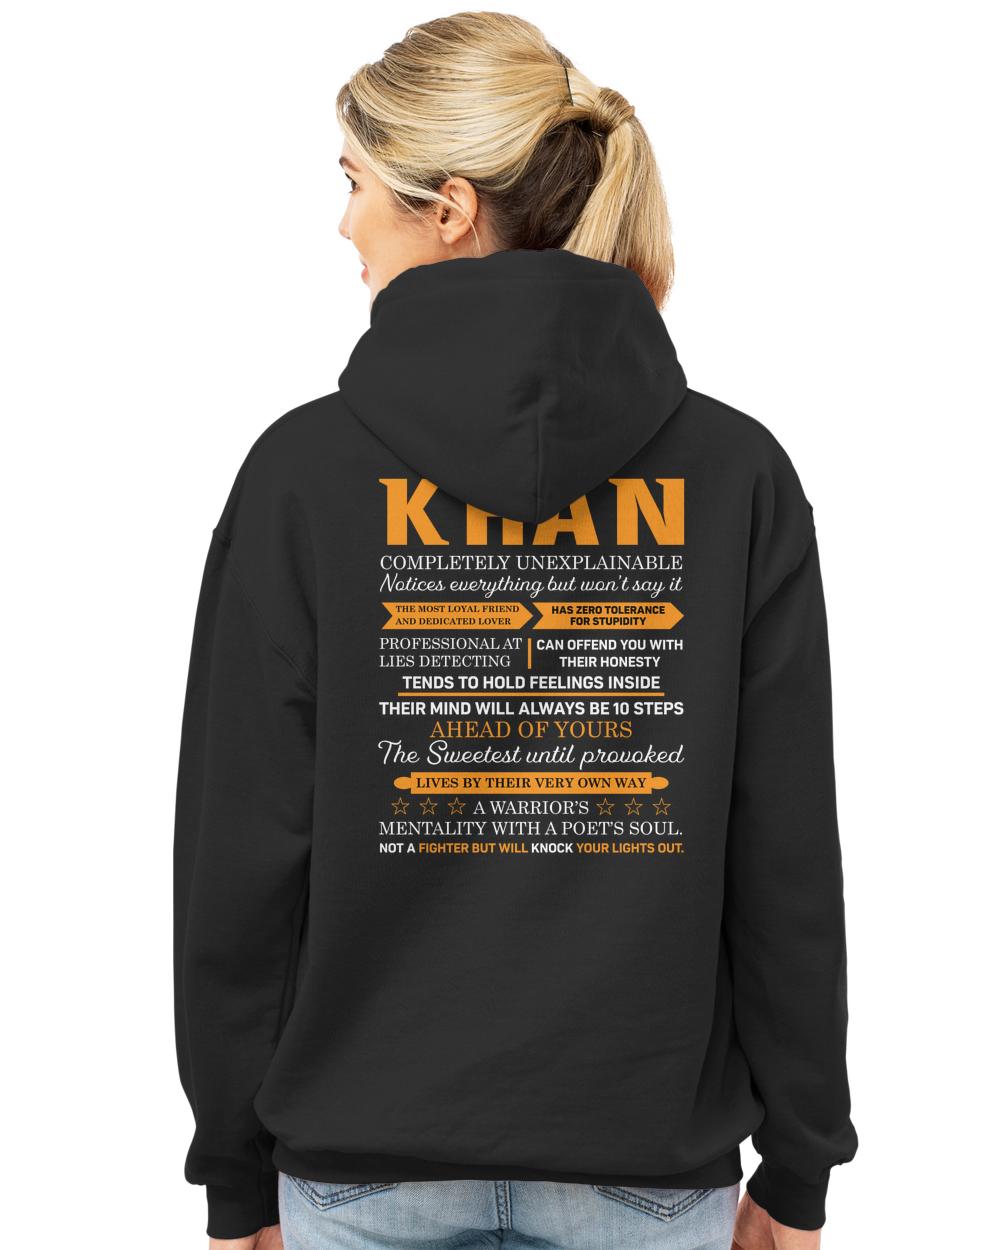 KHAN-13K-N1-01